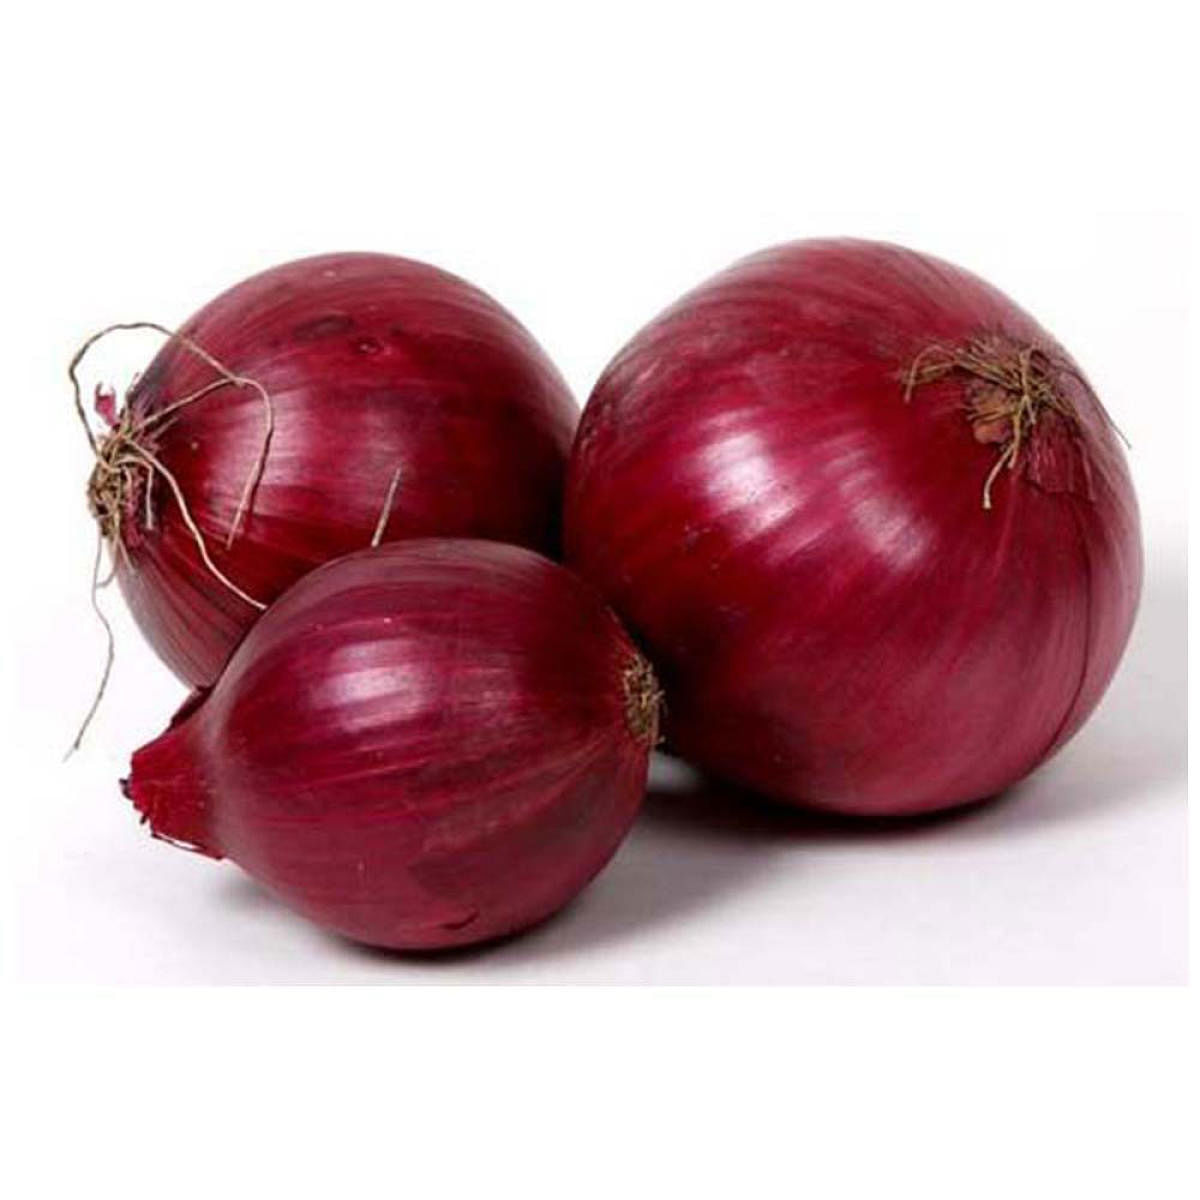 Price hike of onion